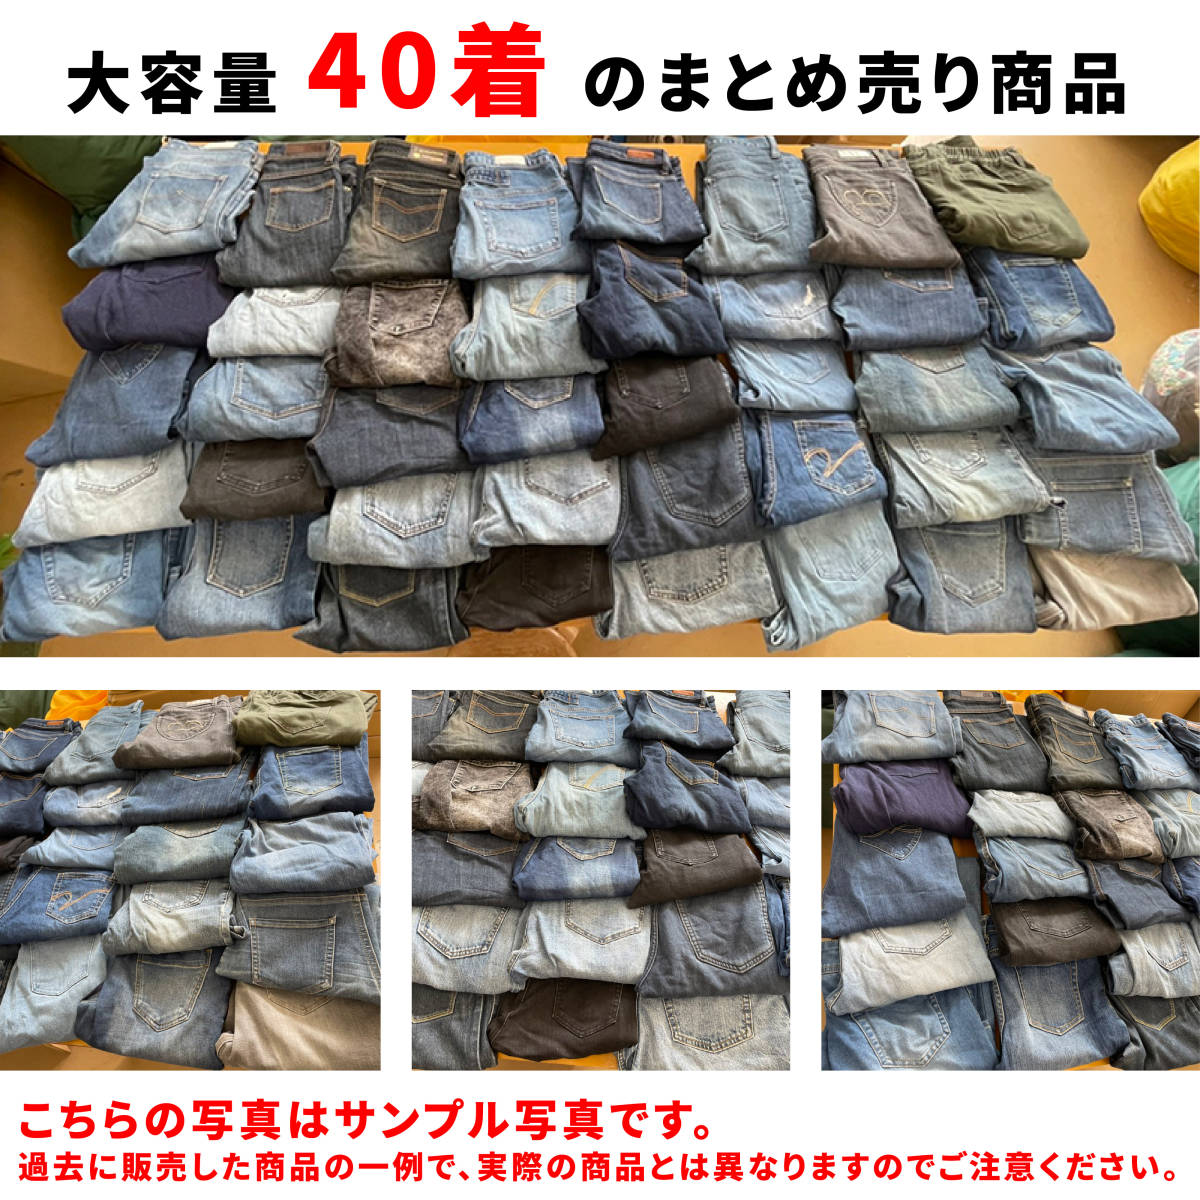 [ super-discount ] popular brand lady's Denim denim pants jeans ji- bread old clothes trader sale resale OK set sale 40 sheets 4-33